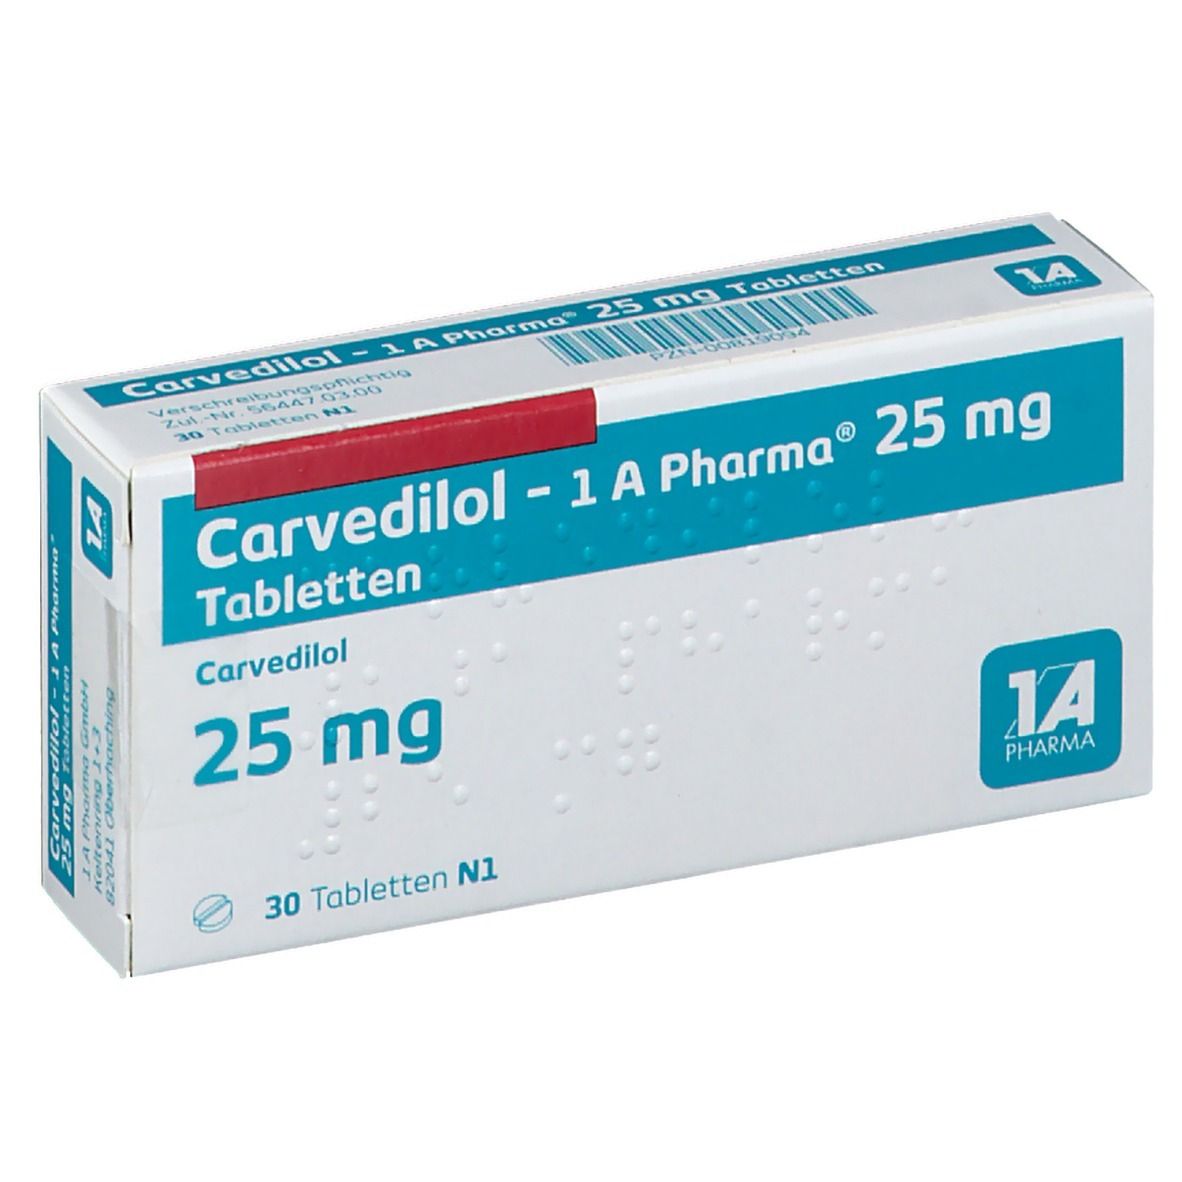 Carvedilol - 1 A Pharma® 25 mg